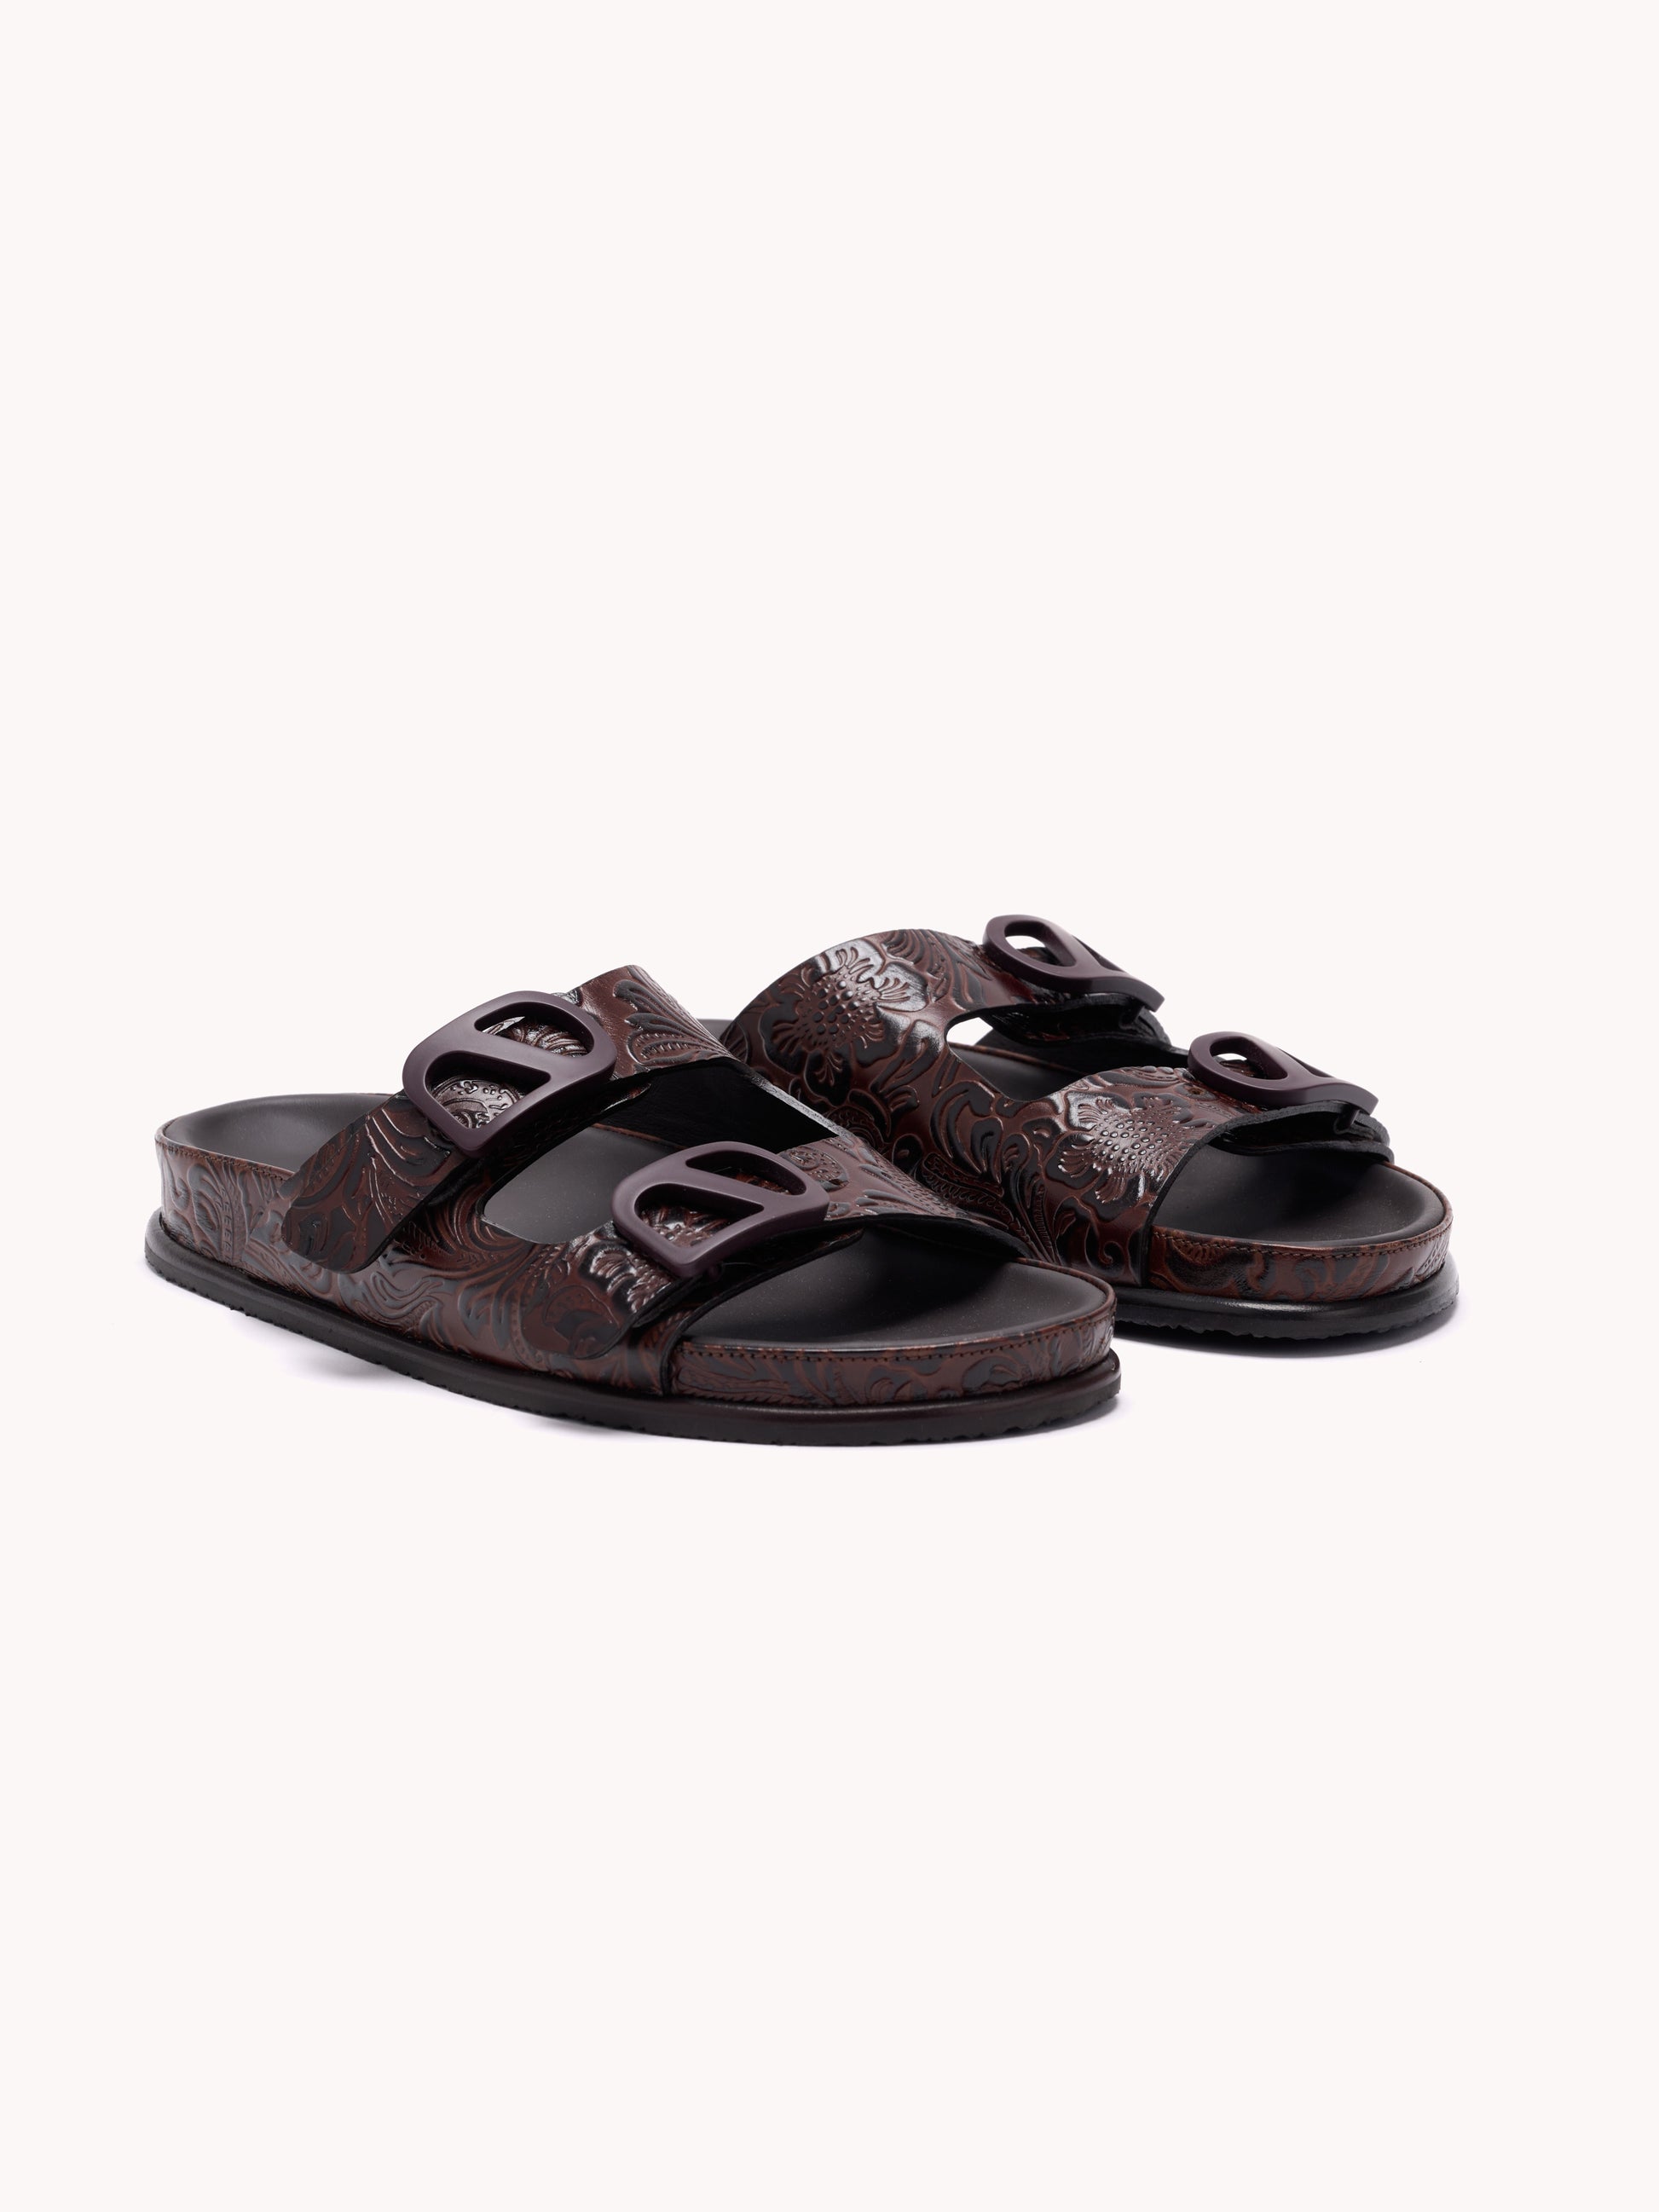 flat sandals comfortable and stylish skorpios